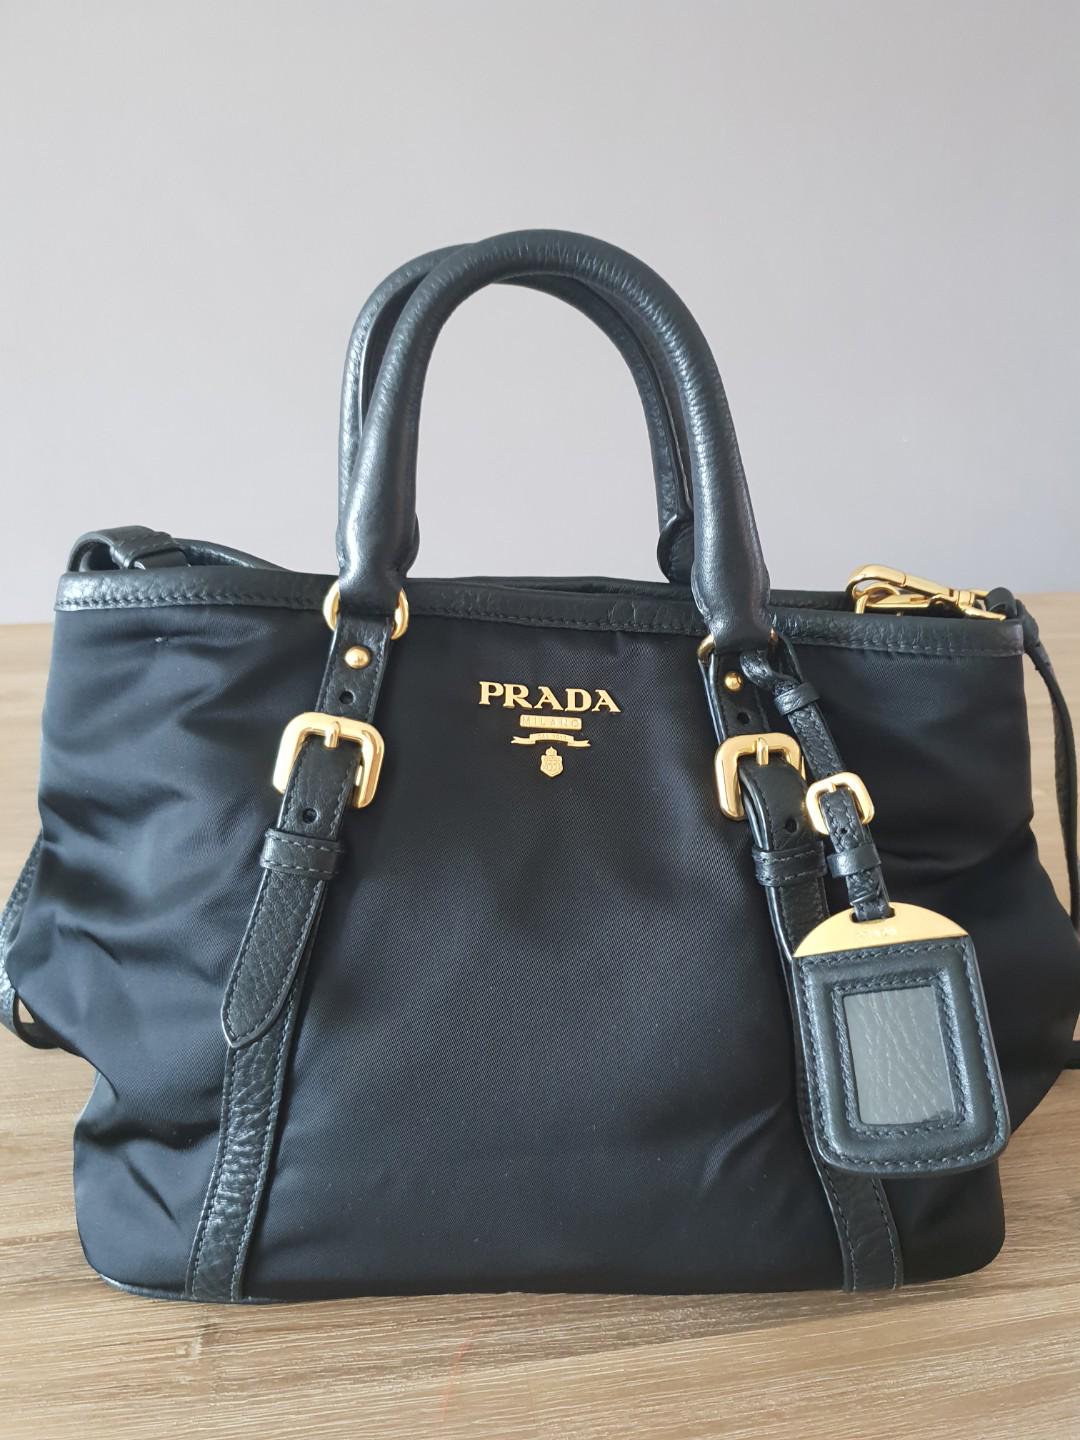 used prada handbags